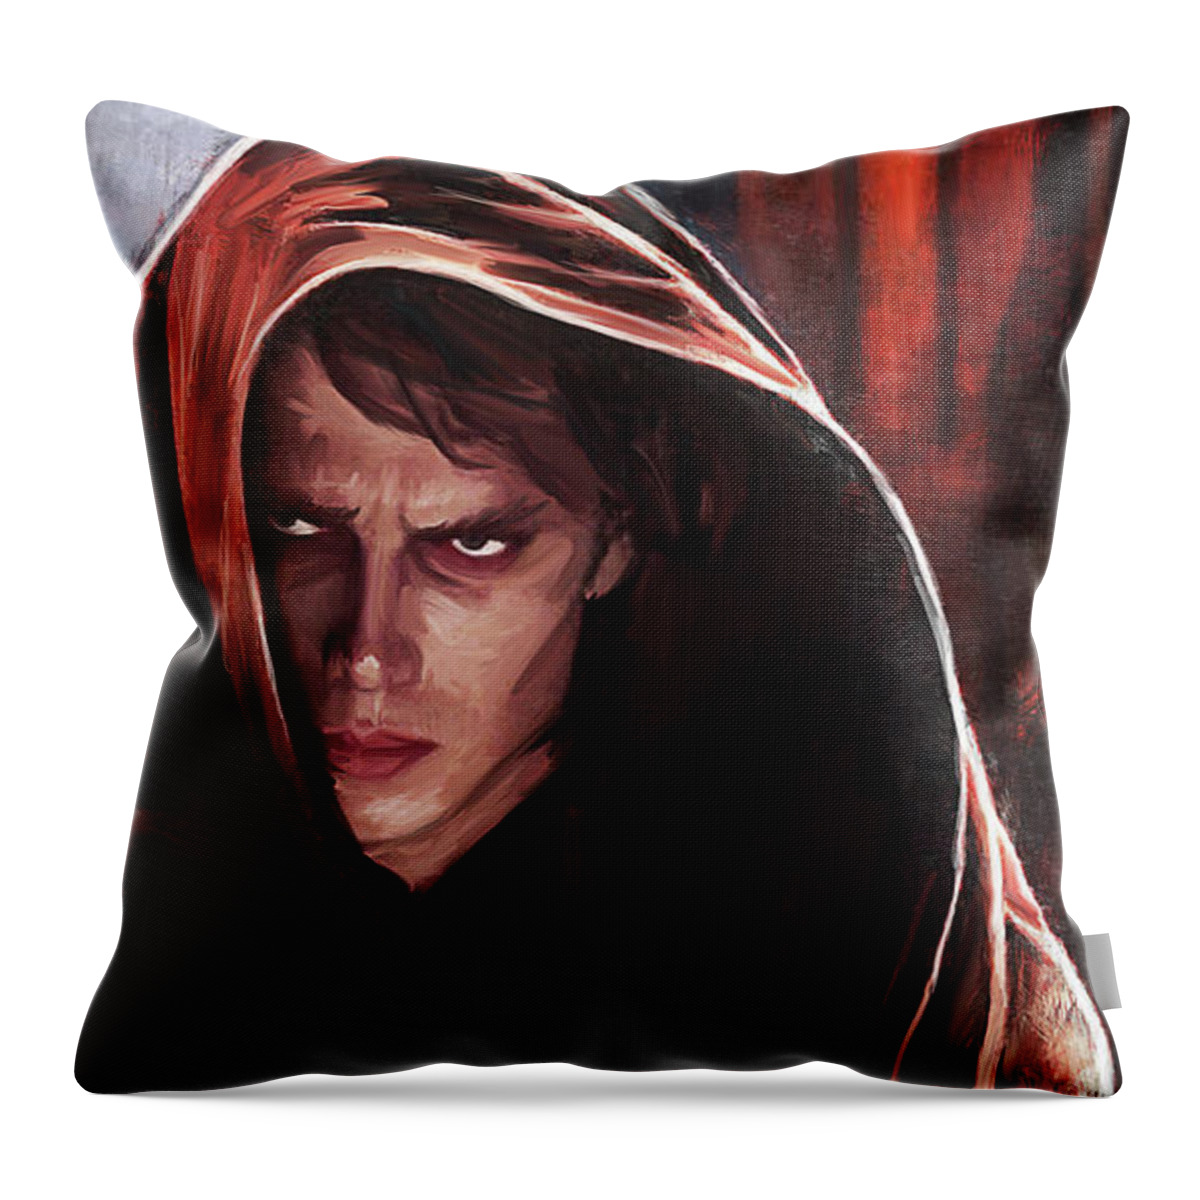 Darth Maul - Star Wars Throw Pillow by Joseph Oland - Pixels